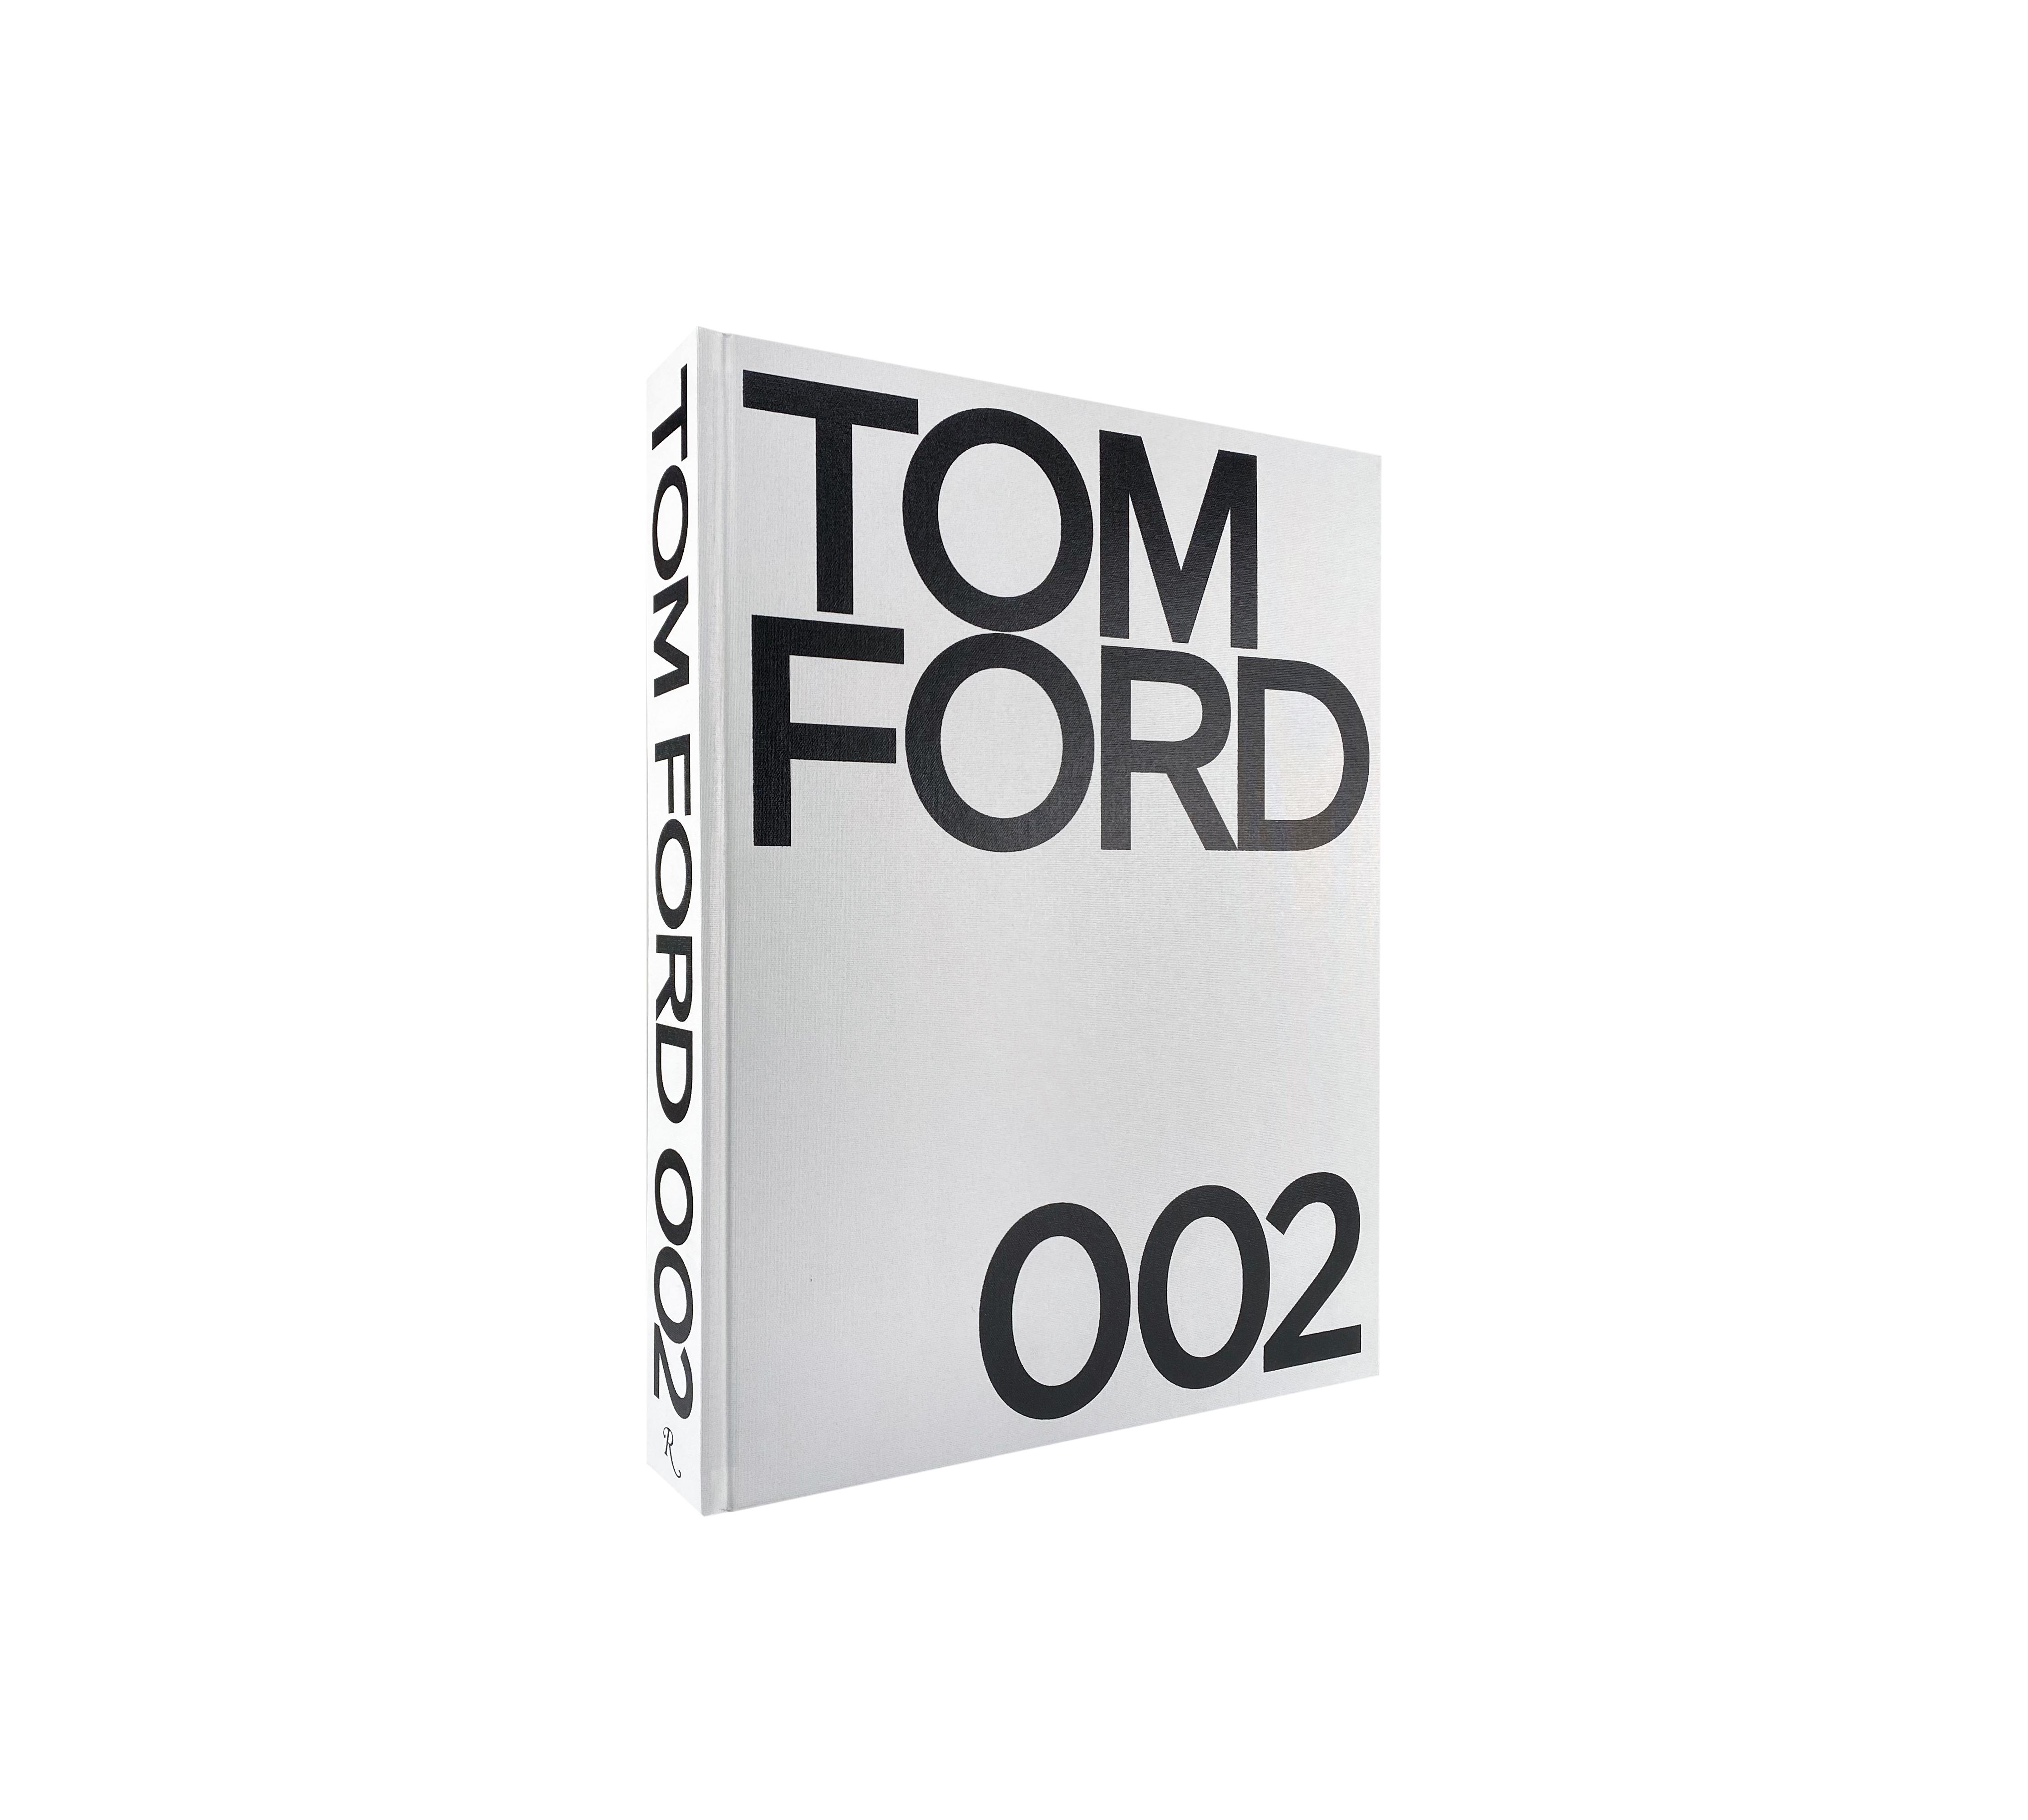 Tom Ford TOM FORD BOOK 002 REGULAR 